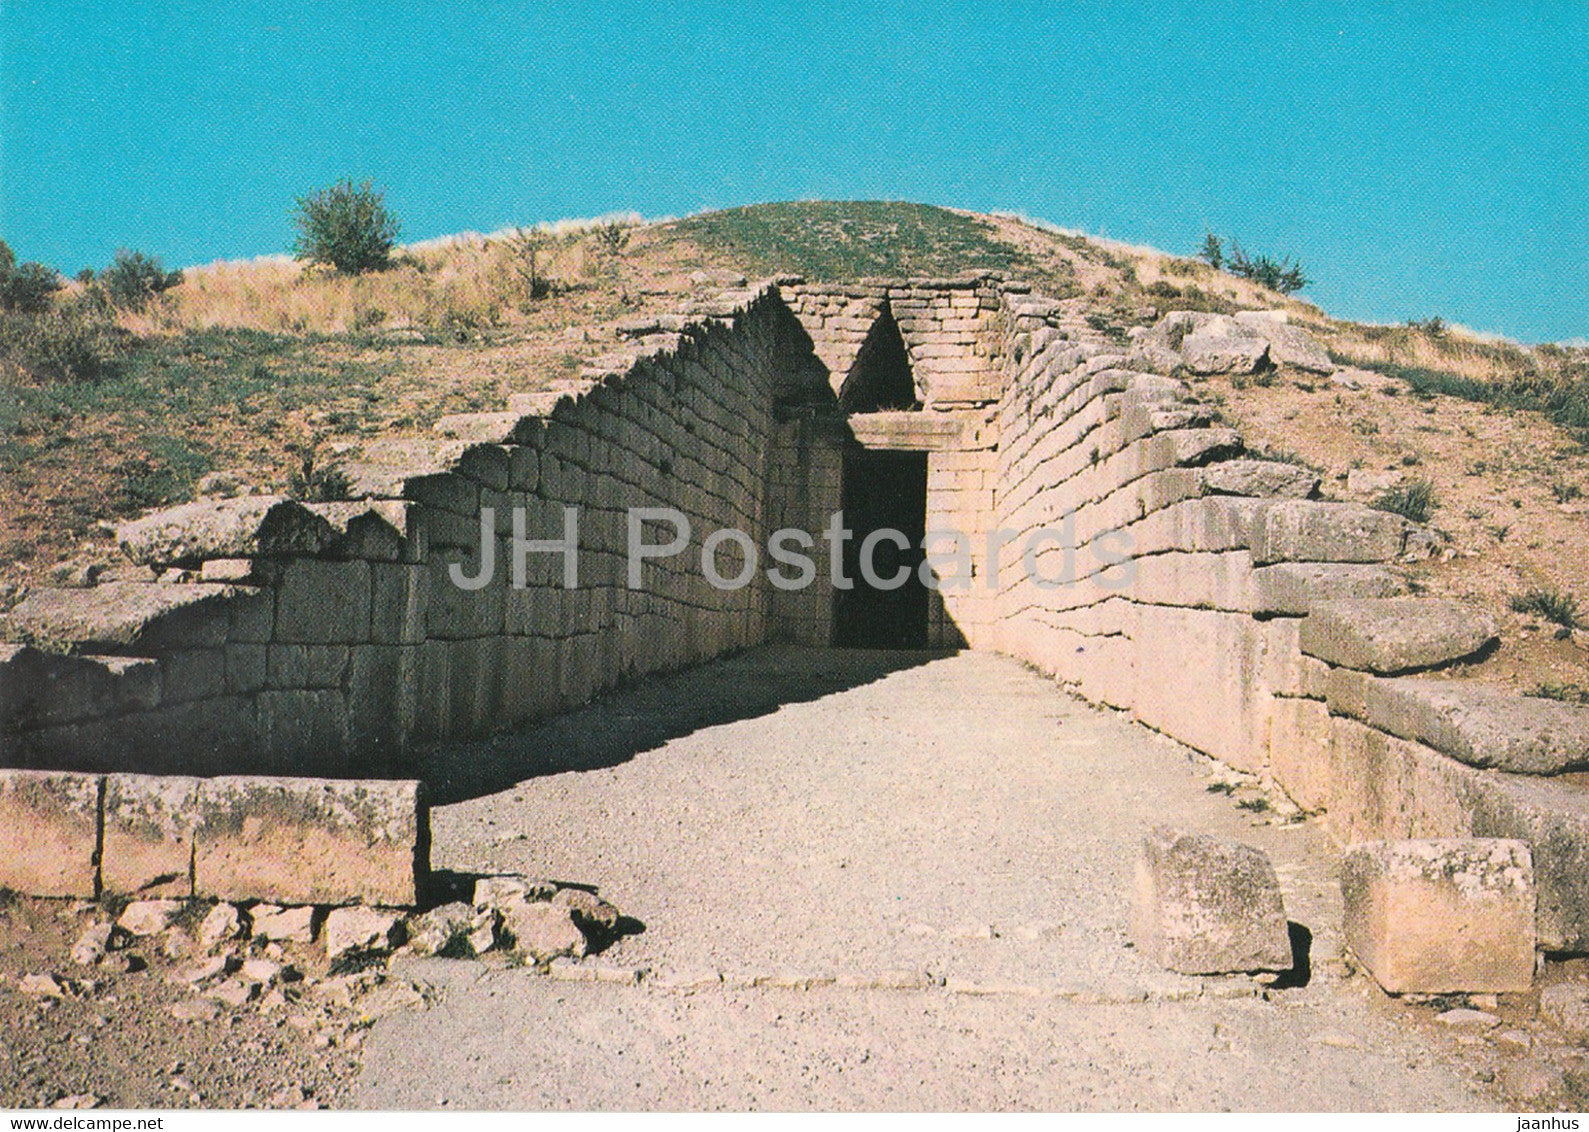 Mycenae - Entrance to the tholos tomb called Treasury of Atreas - 1 - Ancient Greece - 1982 - Greece - unused - JH Postcards